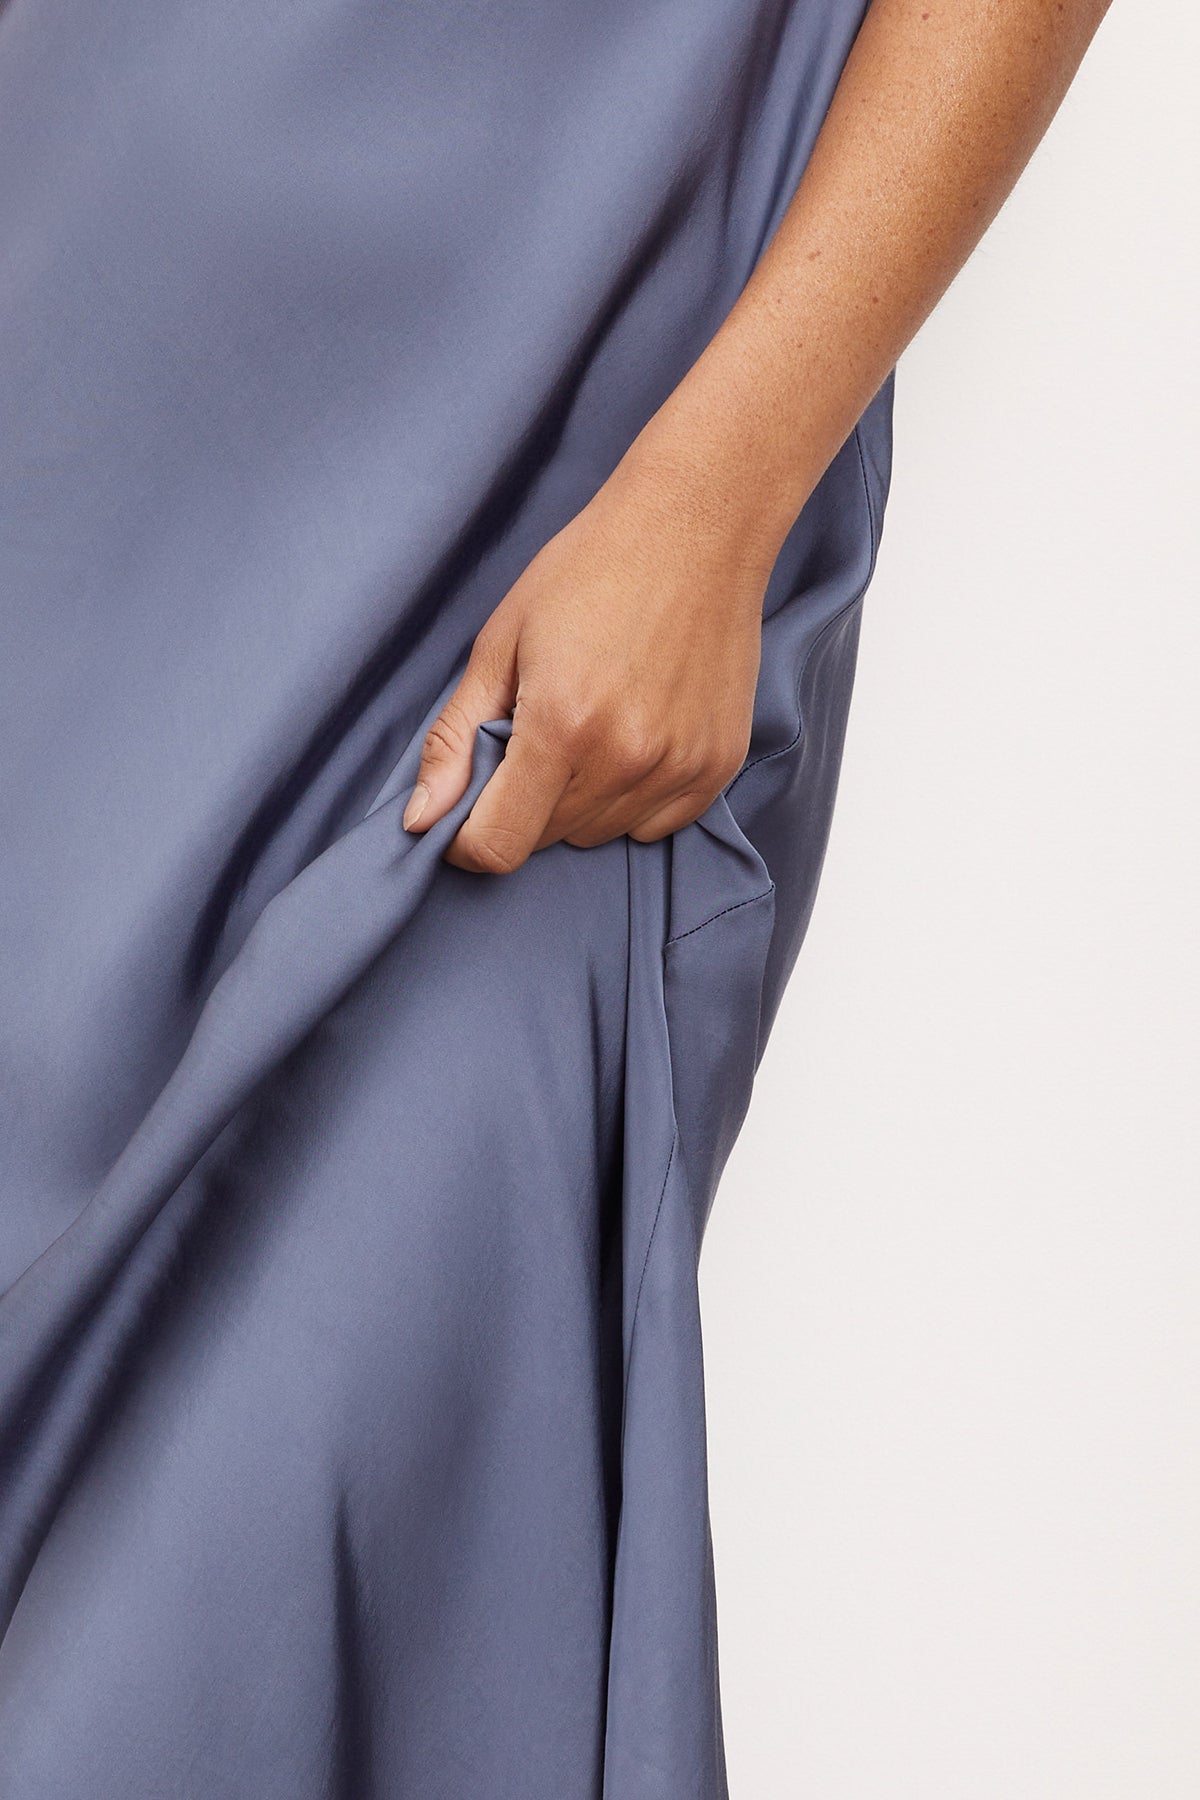 A woman wearing a versatile Velvet by Graham & Spencer POPPY SATIN SLIP DRESS with adjustable straps.-36001442103489